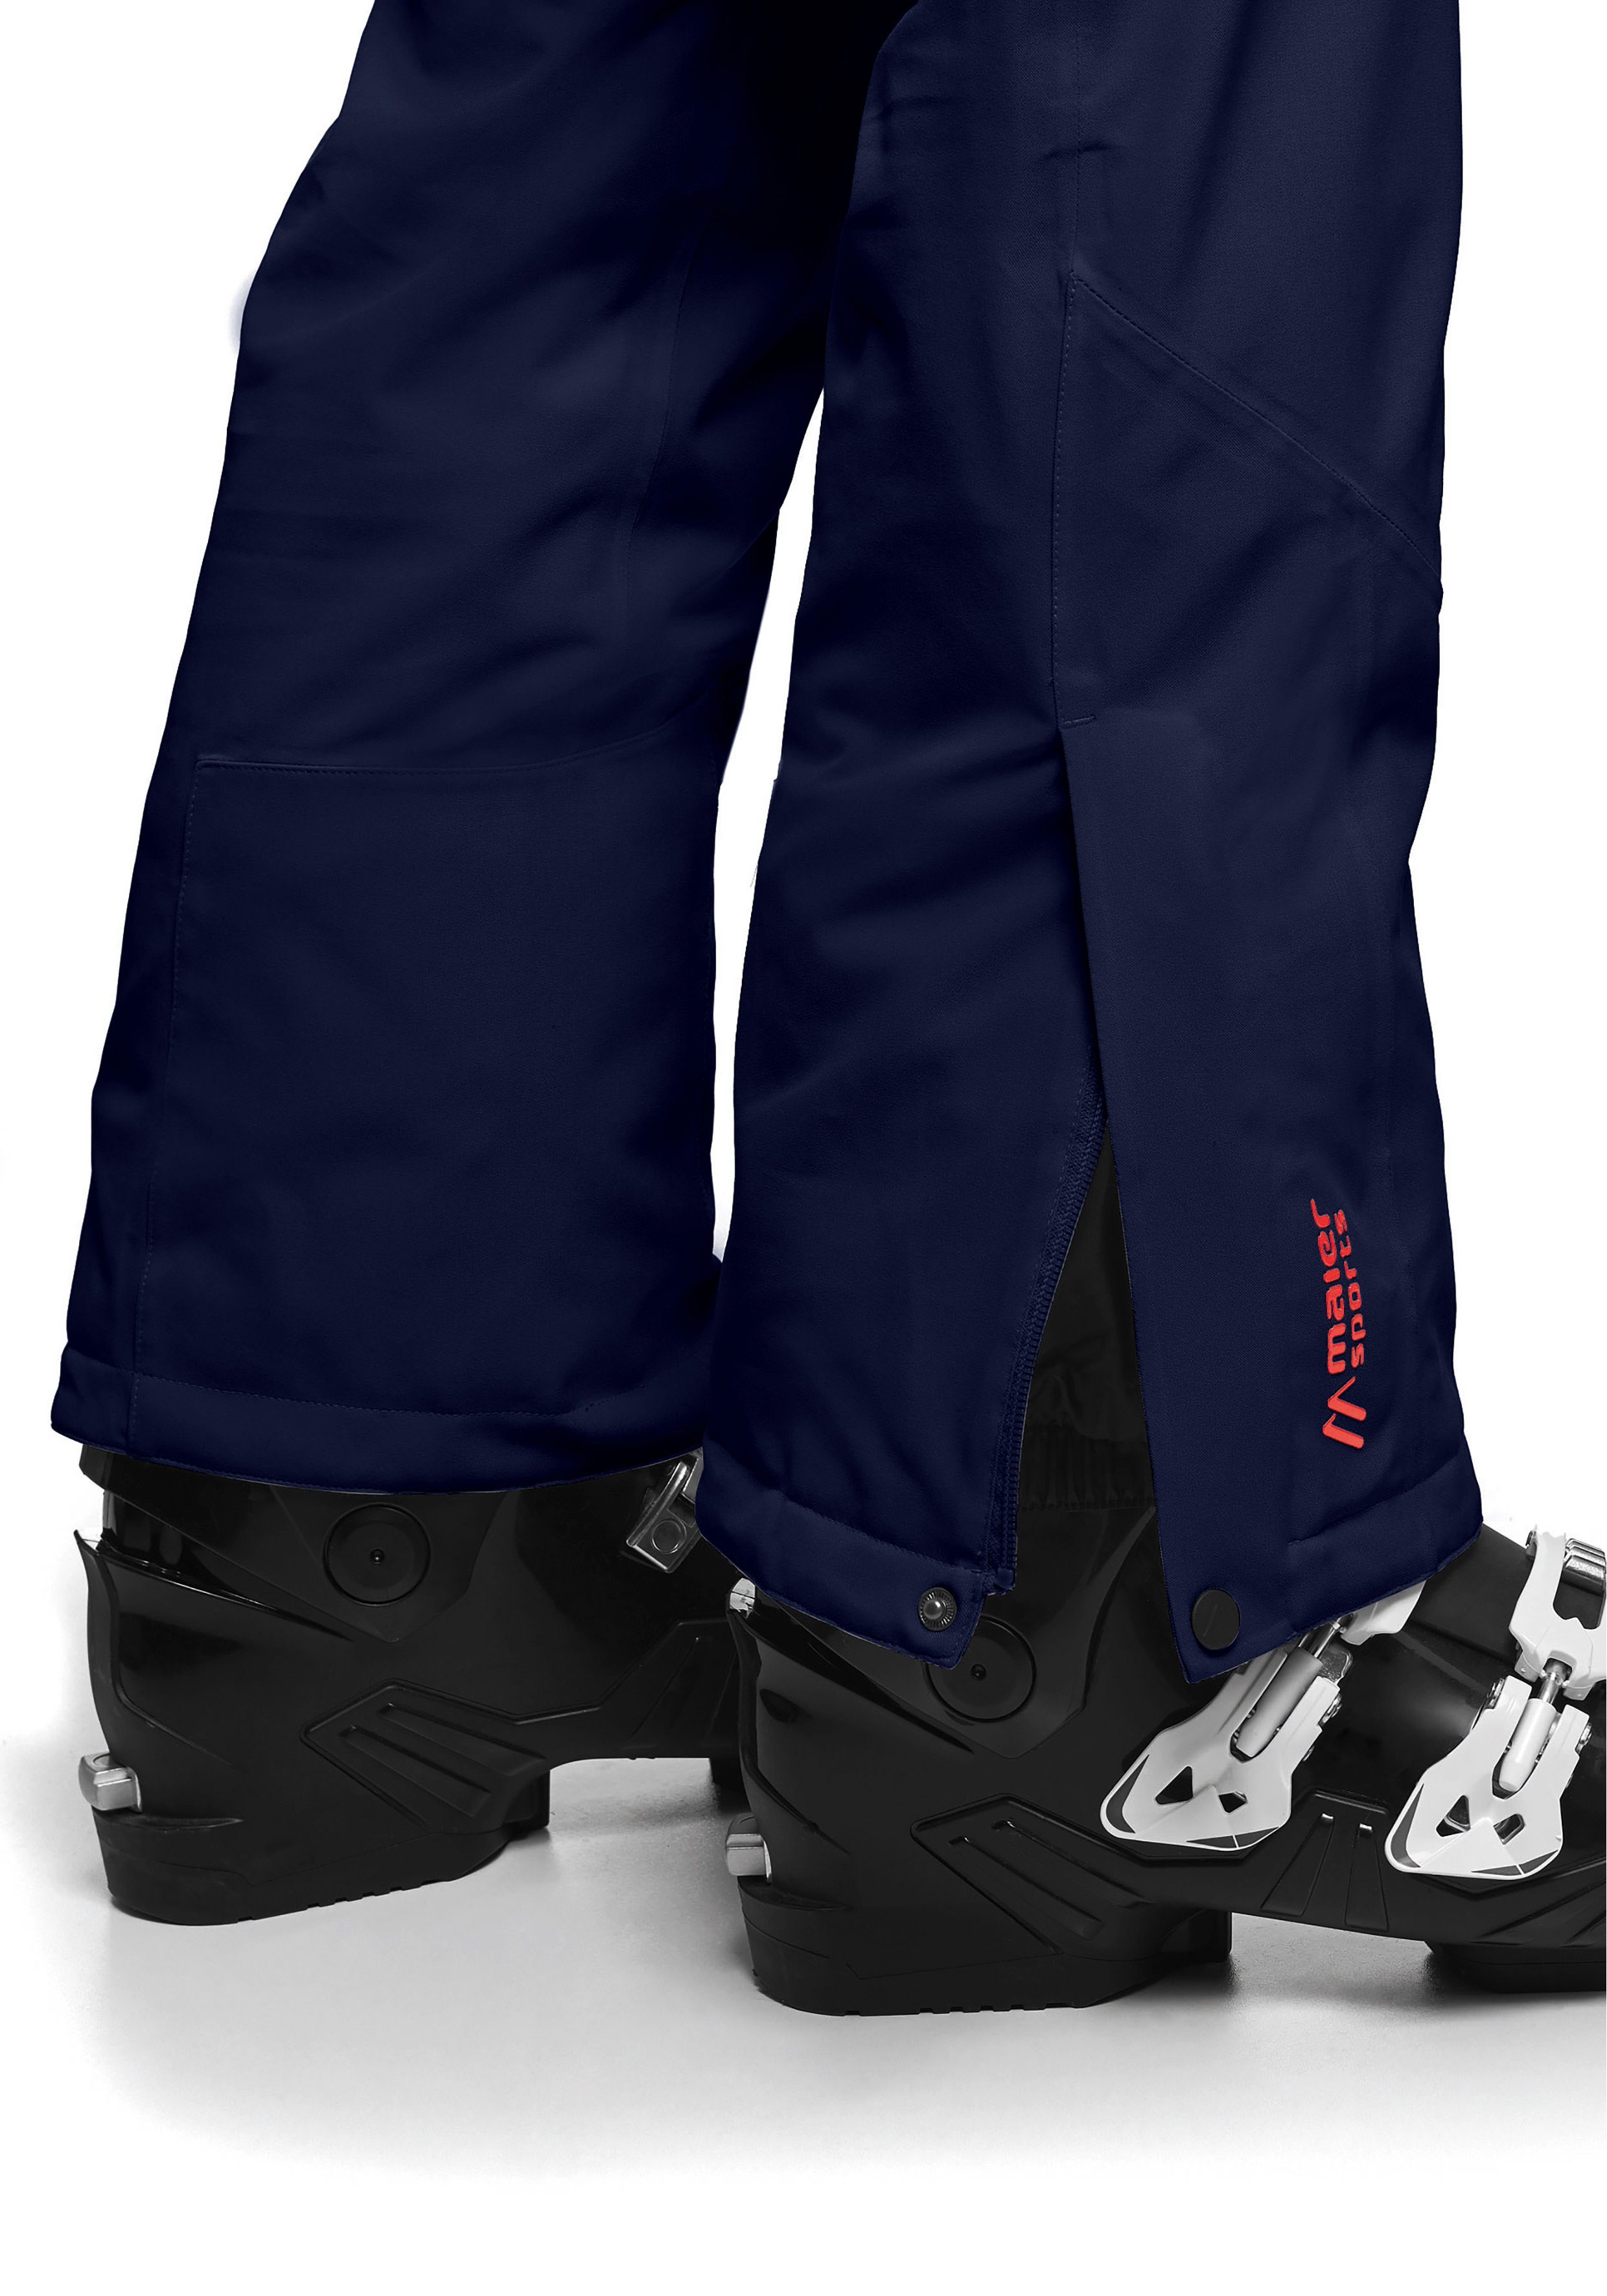 Maier Sports Feminin, Pants dunkelblau Skihose sportliche in schlanker Coral Silhouette Skihose